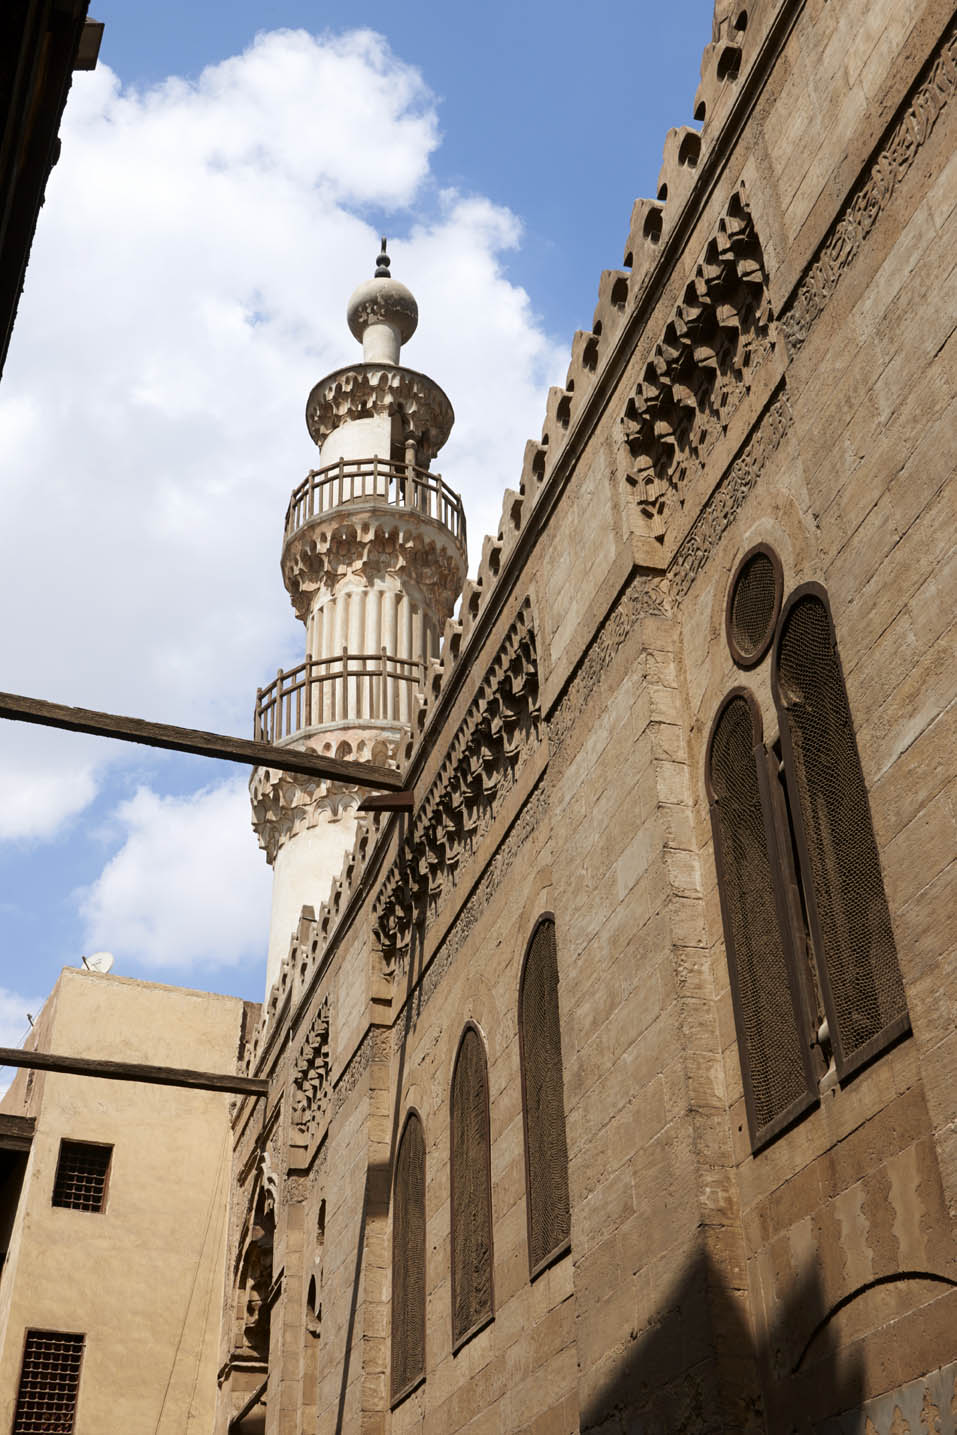 Exterior, upwards view along facade to minaret